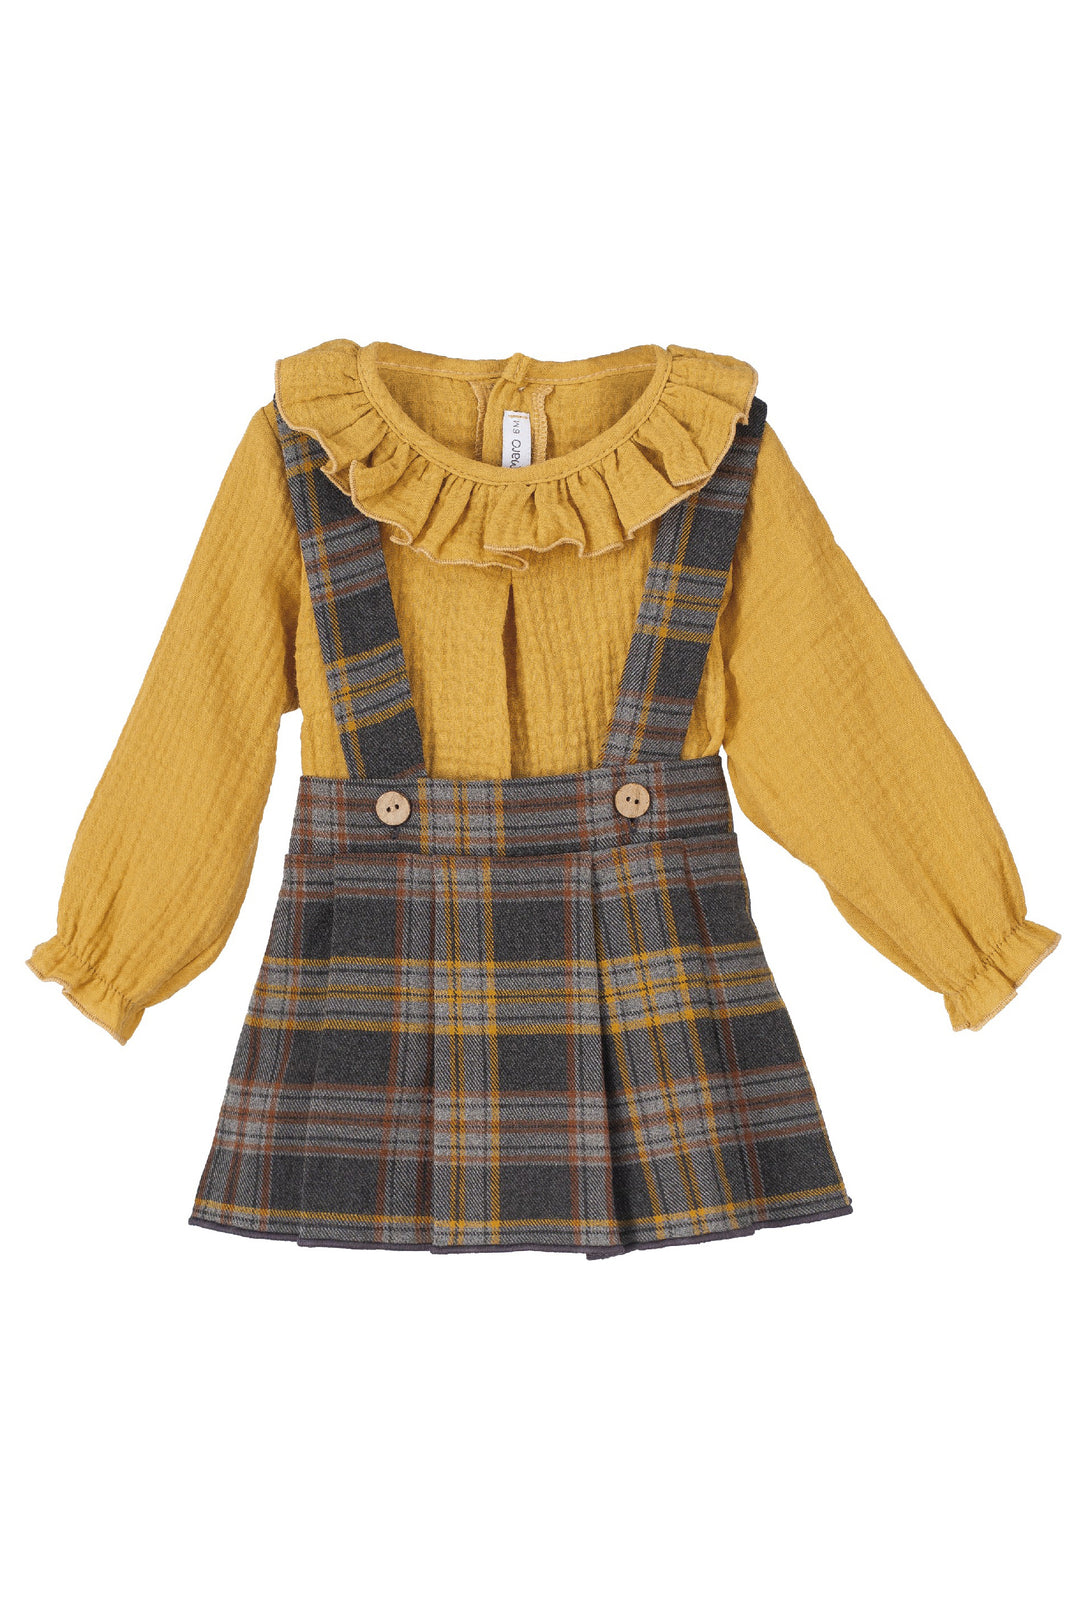 Calamaro "Brooke" Mustard Blouse & Grey Tartan Skirt | Millie and John